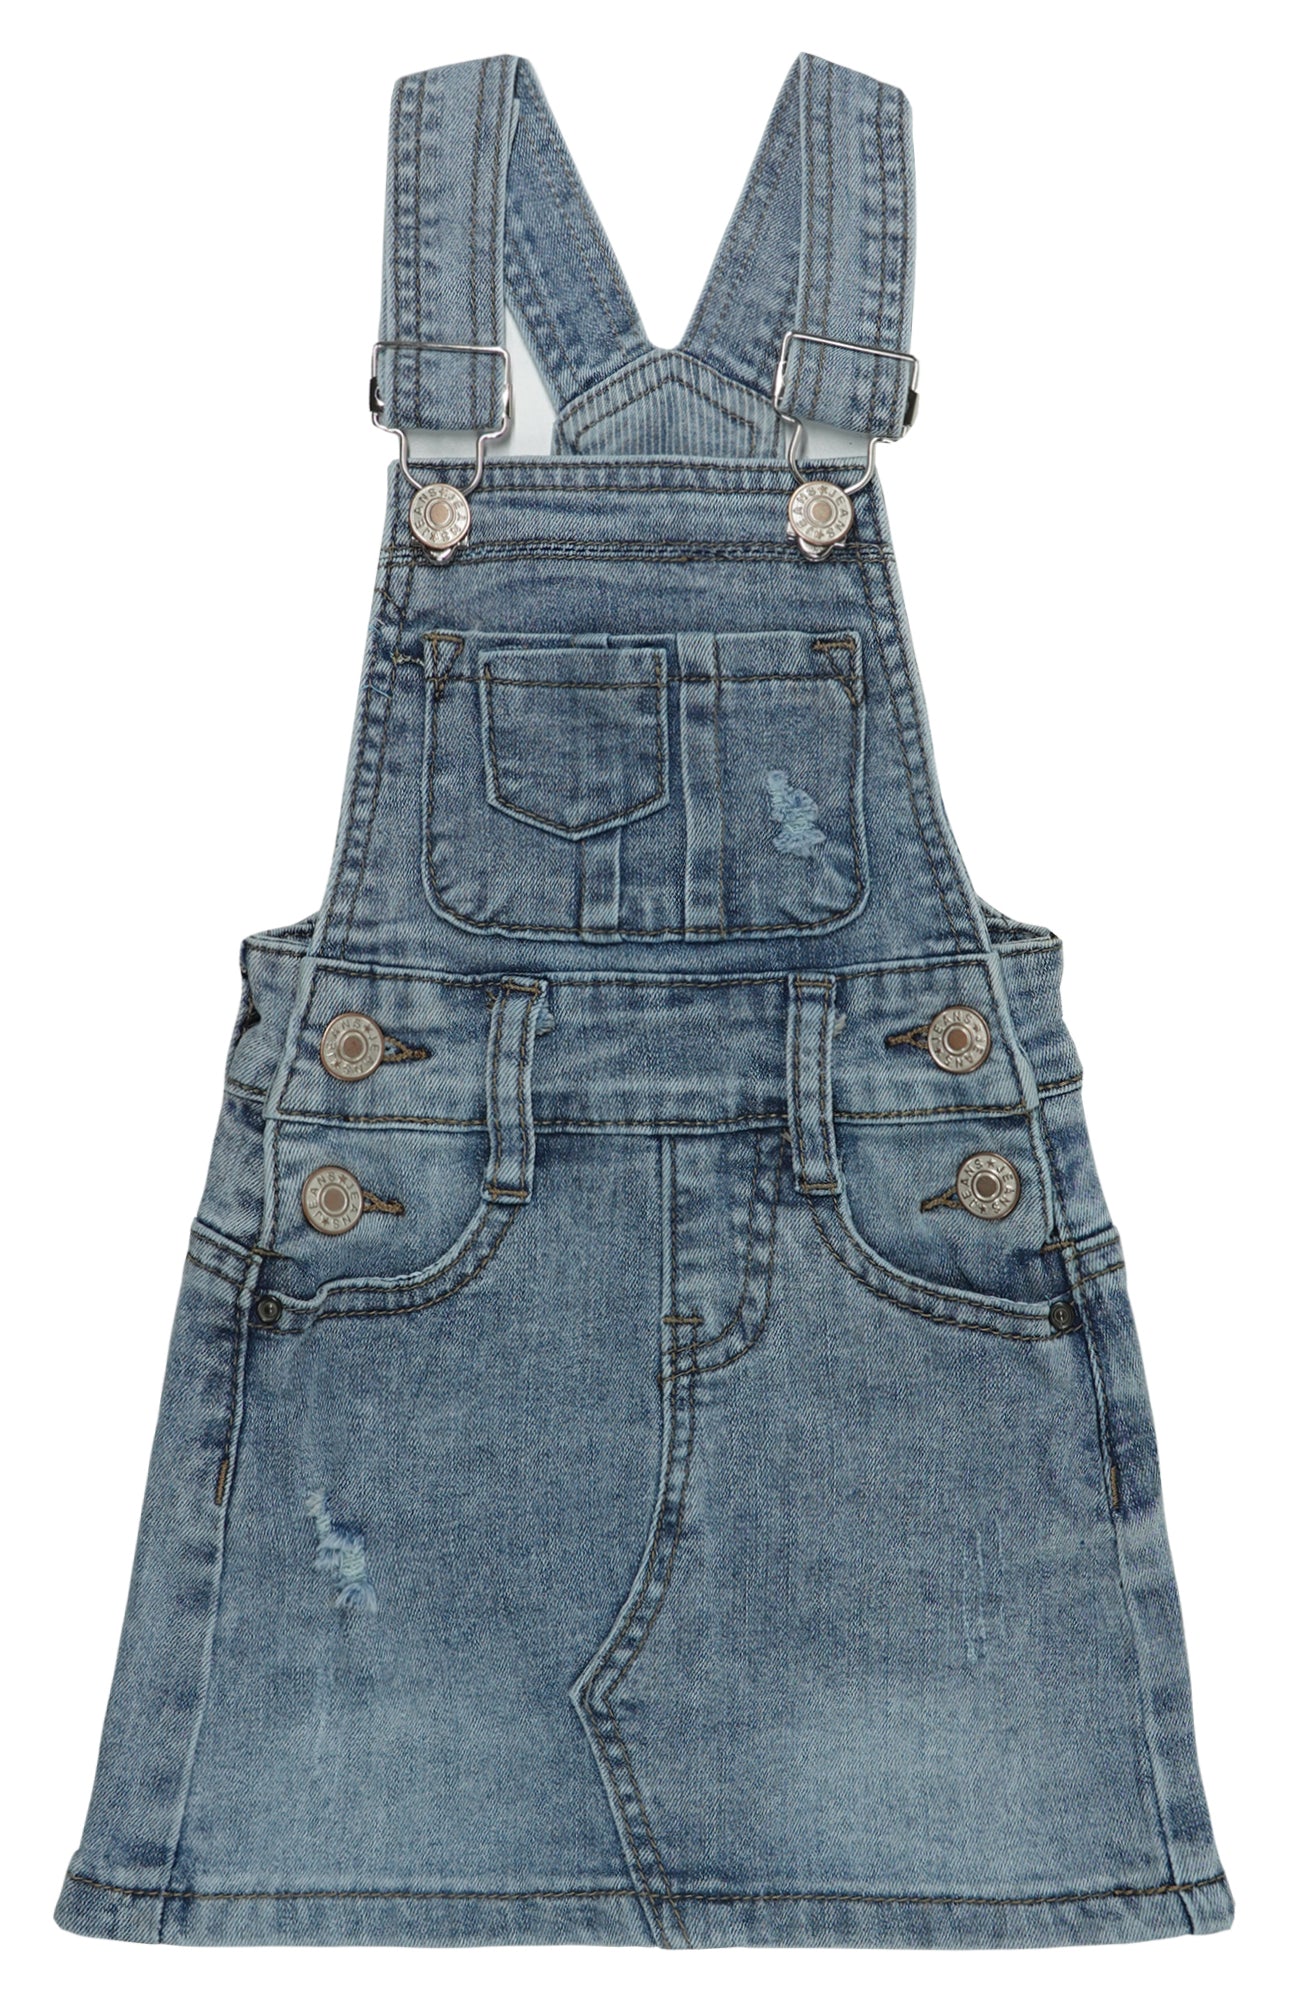 Baby Little Girls Skirt,Ripped Soft Strechy Denim Girls Summer Overalls Dress